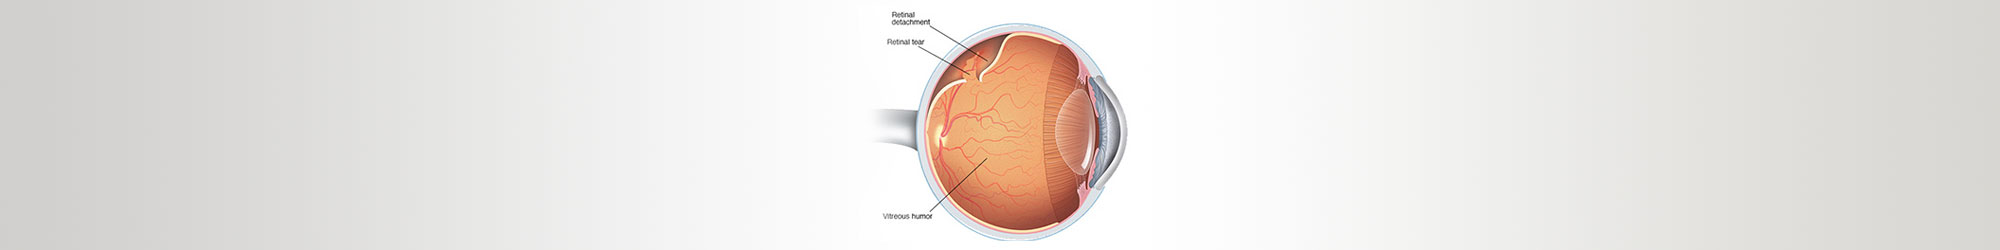 Common Symptoms of Retinal Disorders